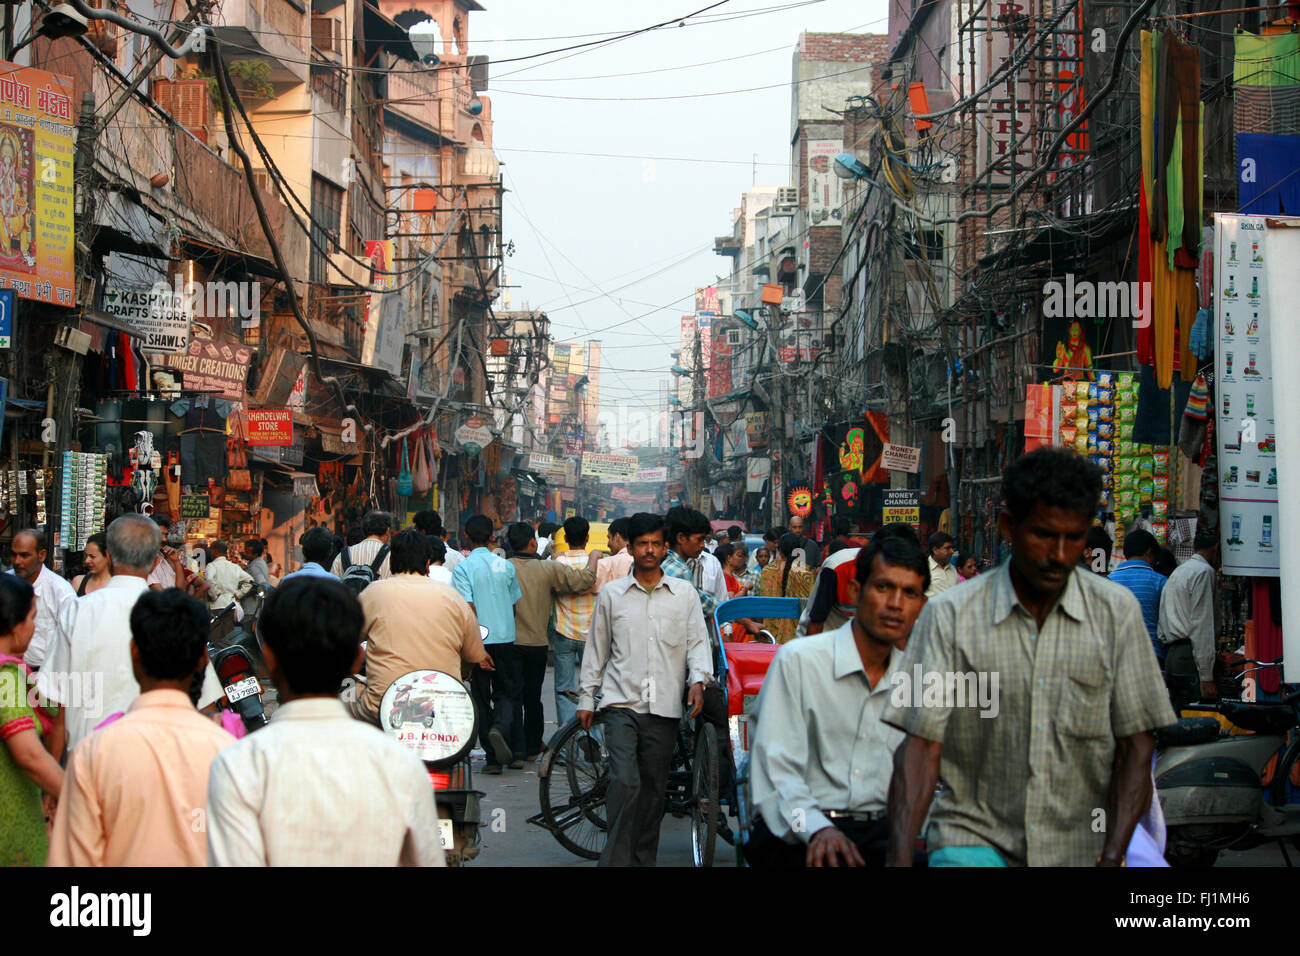 Crowd in a street of Delhi, Pahar Ganj district, India Stock Photo